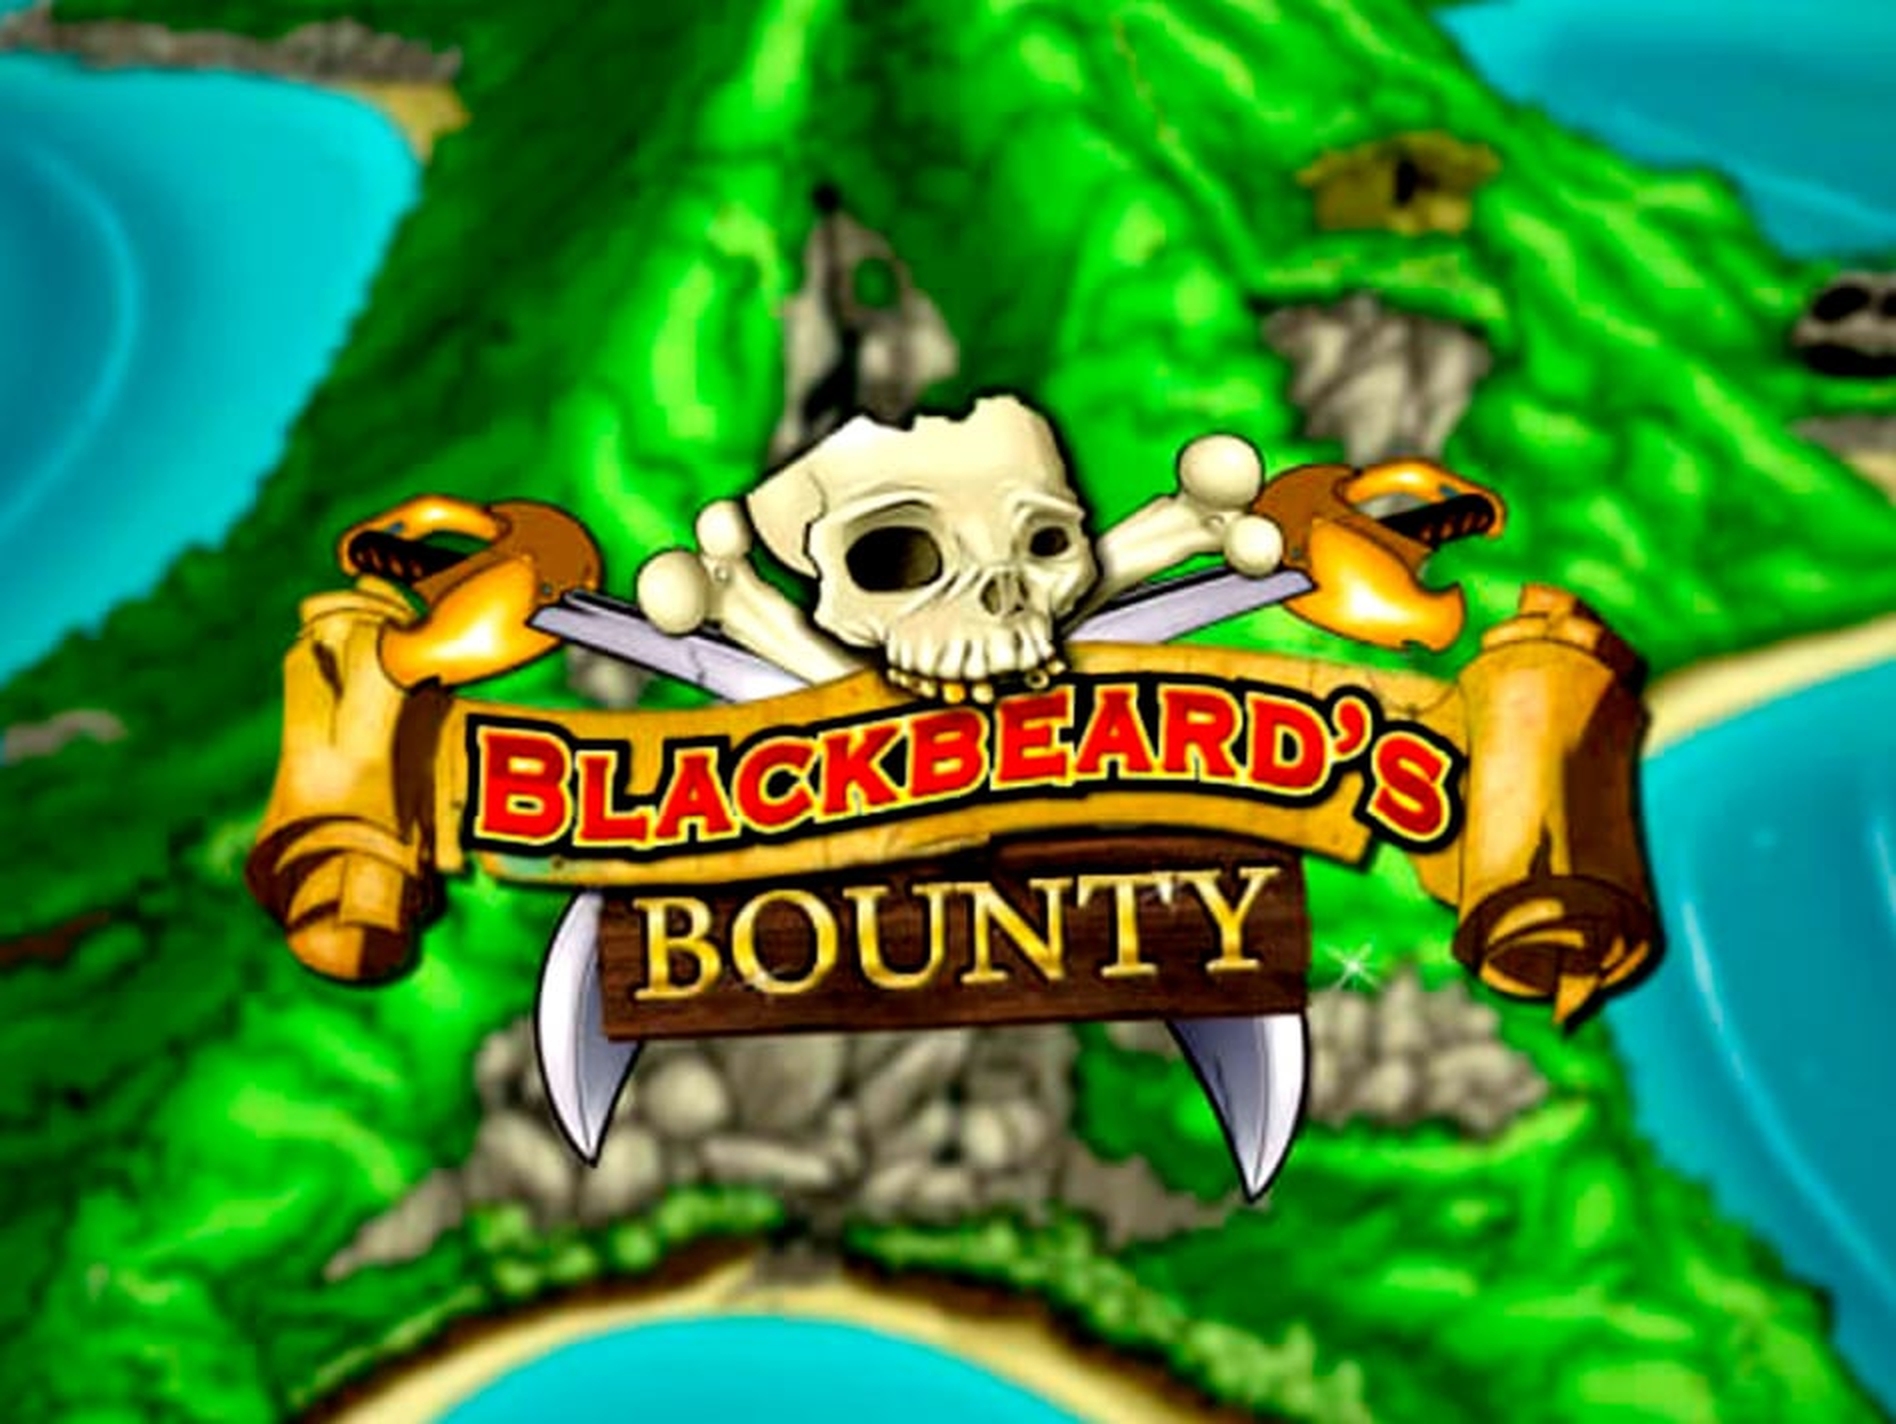 The Blackbeard's Bounty Online Slot Demo Game by Habanero